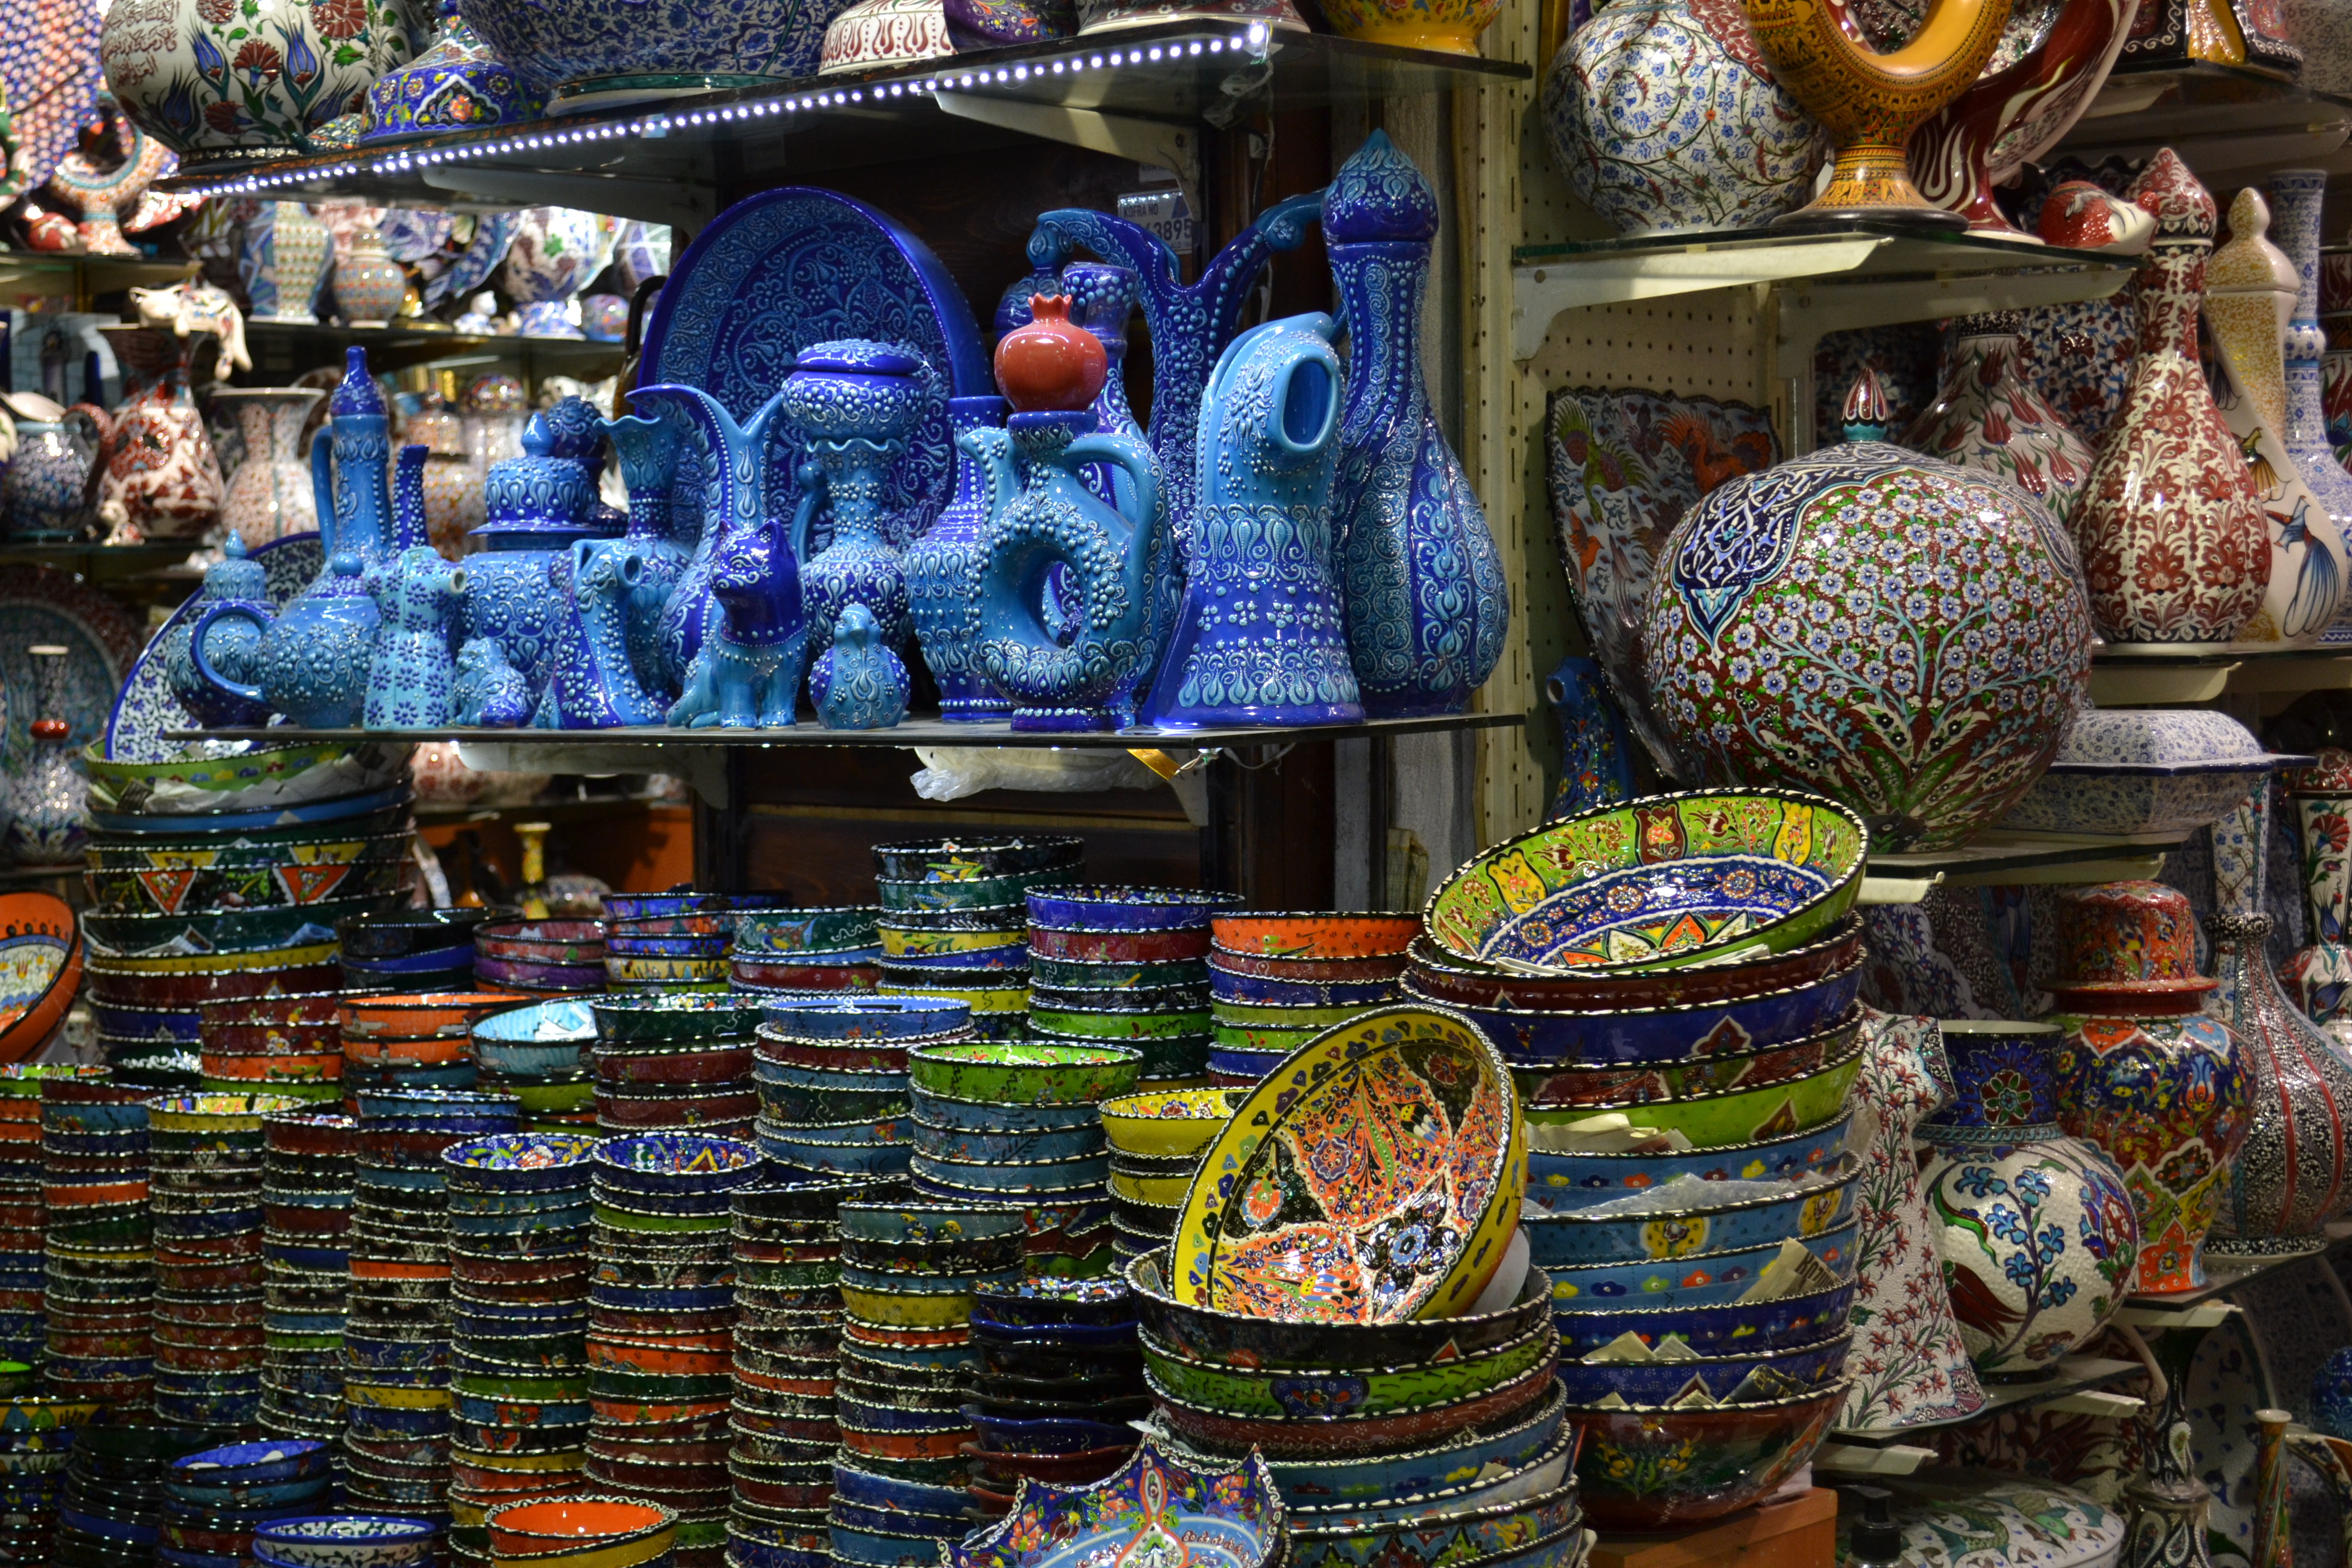 Turkey: The Grand Bazaar, Istanbul